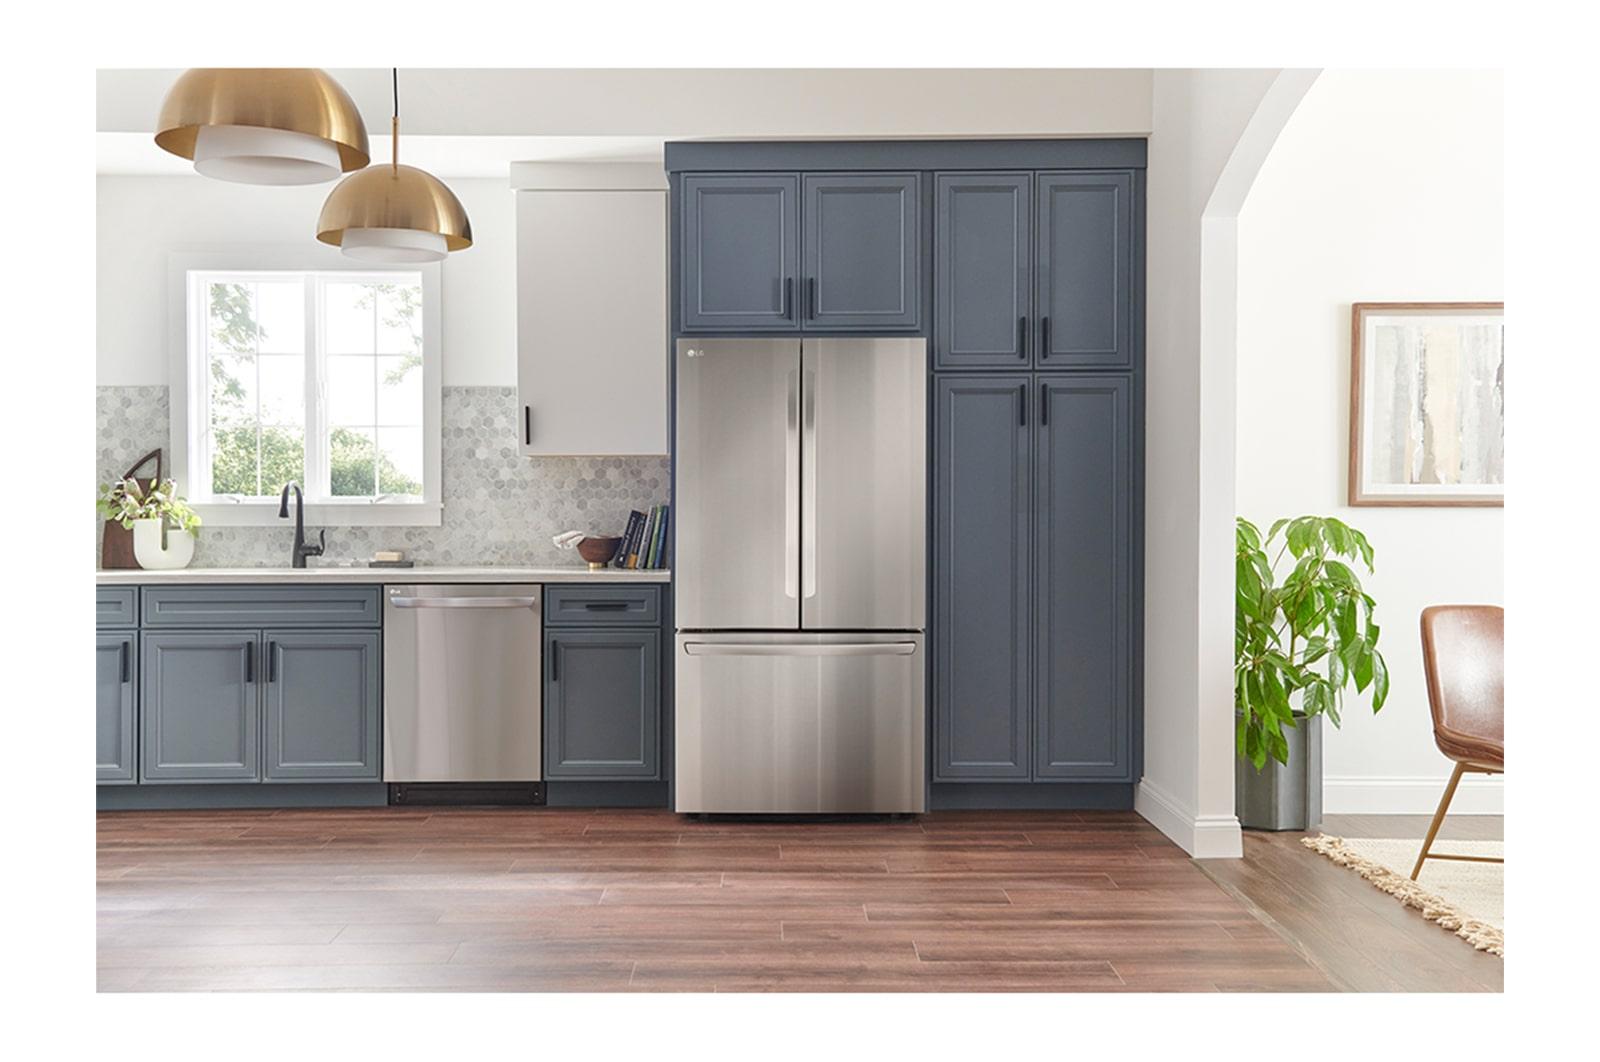 Lg 27 cu. ft. Smart Counter-Depth MAX™ French Door Refrigerator